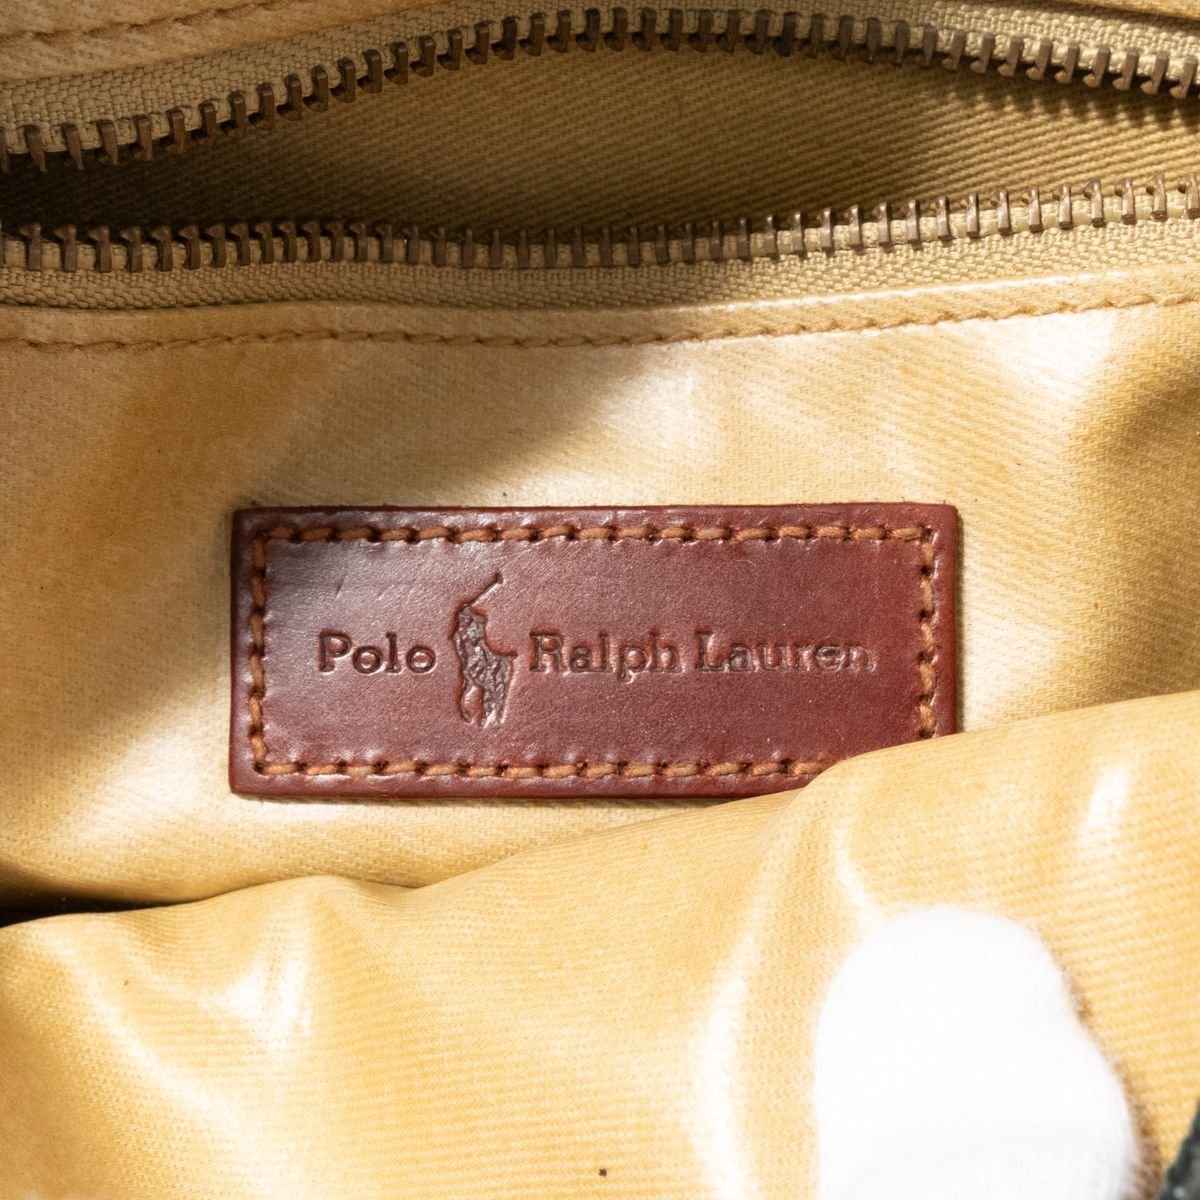 Polo RALPH LAUREN セカンドバッグ グリーン 緑 ネイビー 紺 チェック レザー メンズ 紳士 Bag カバン 鞄 ブランド ポロ ラルフローレン_画像4